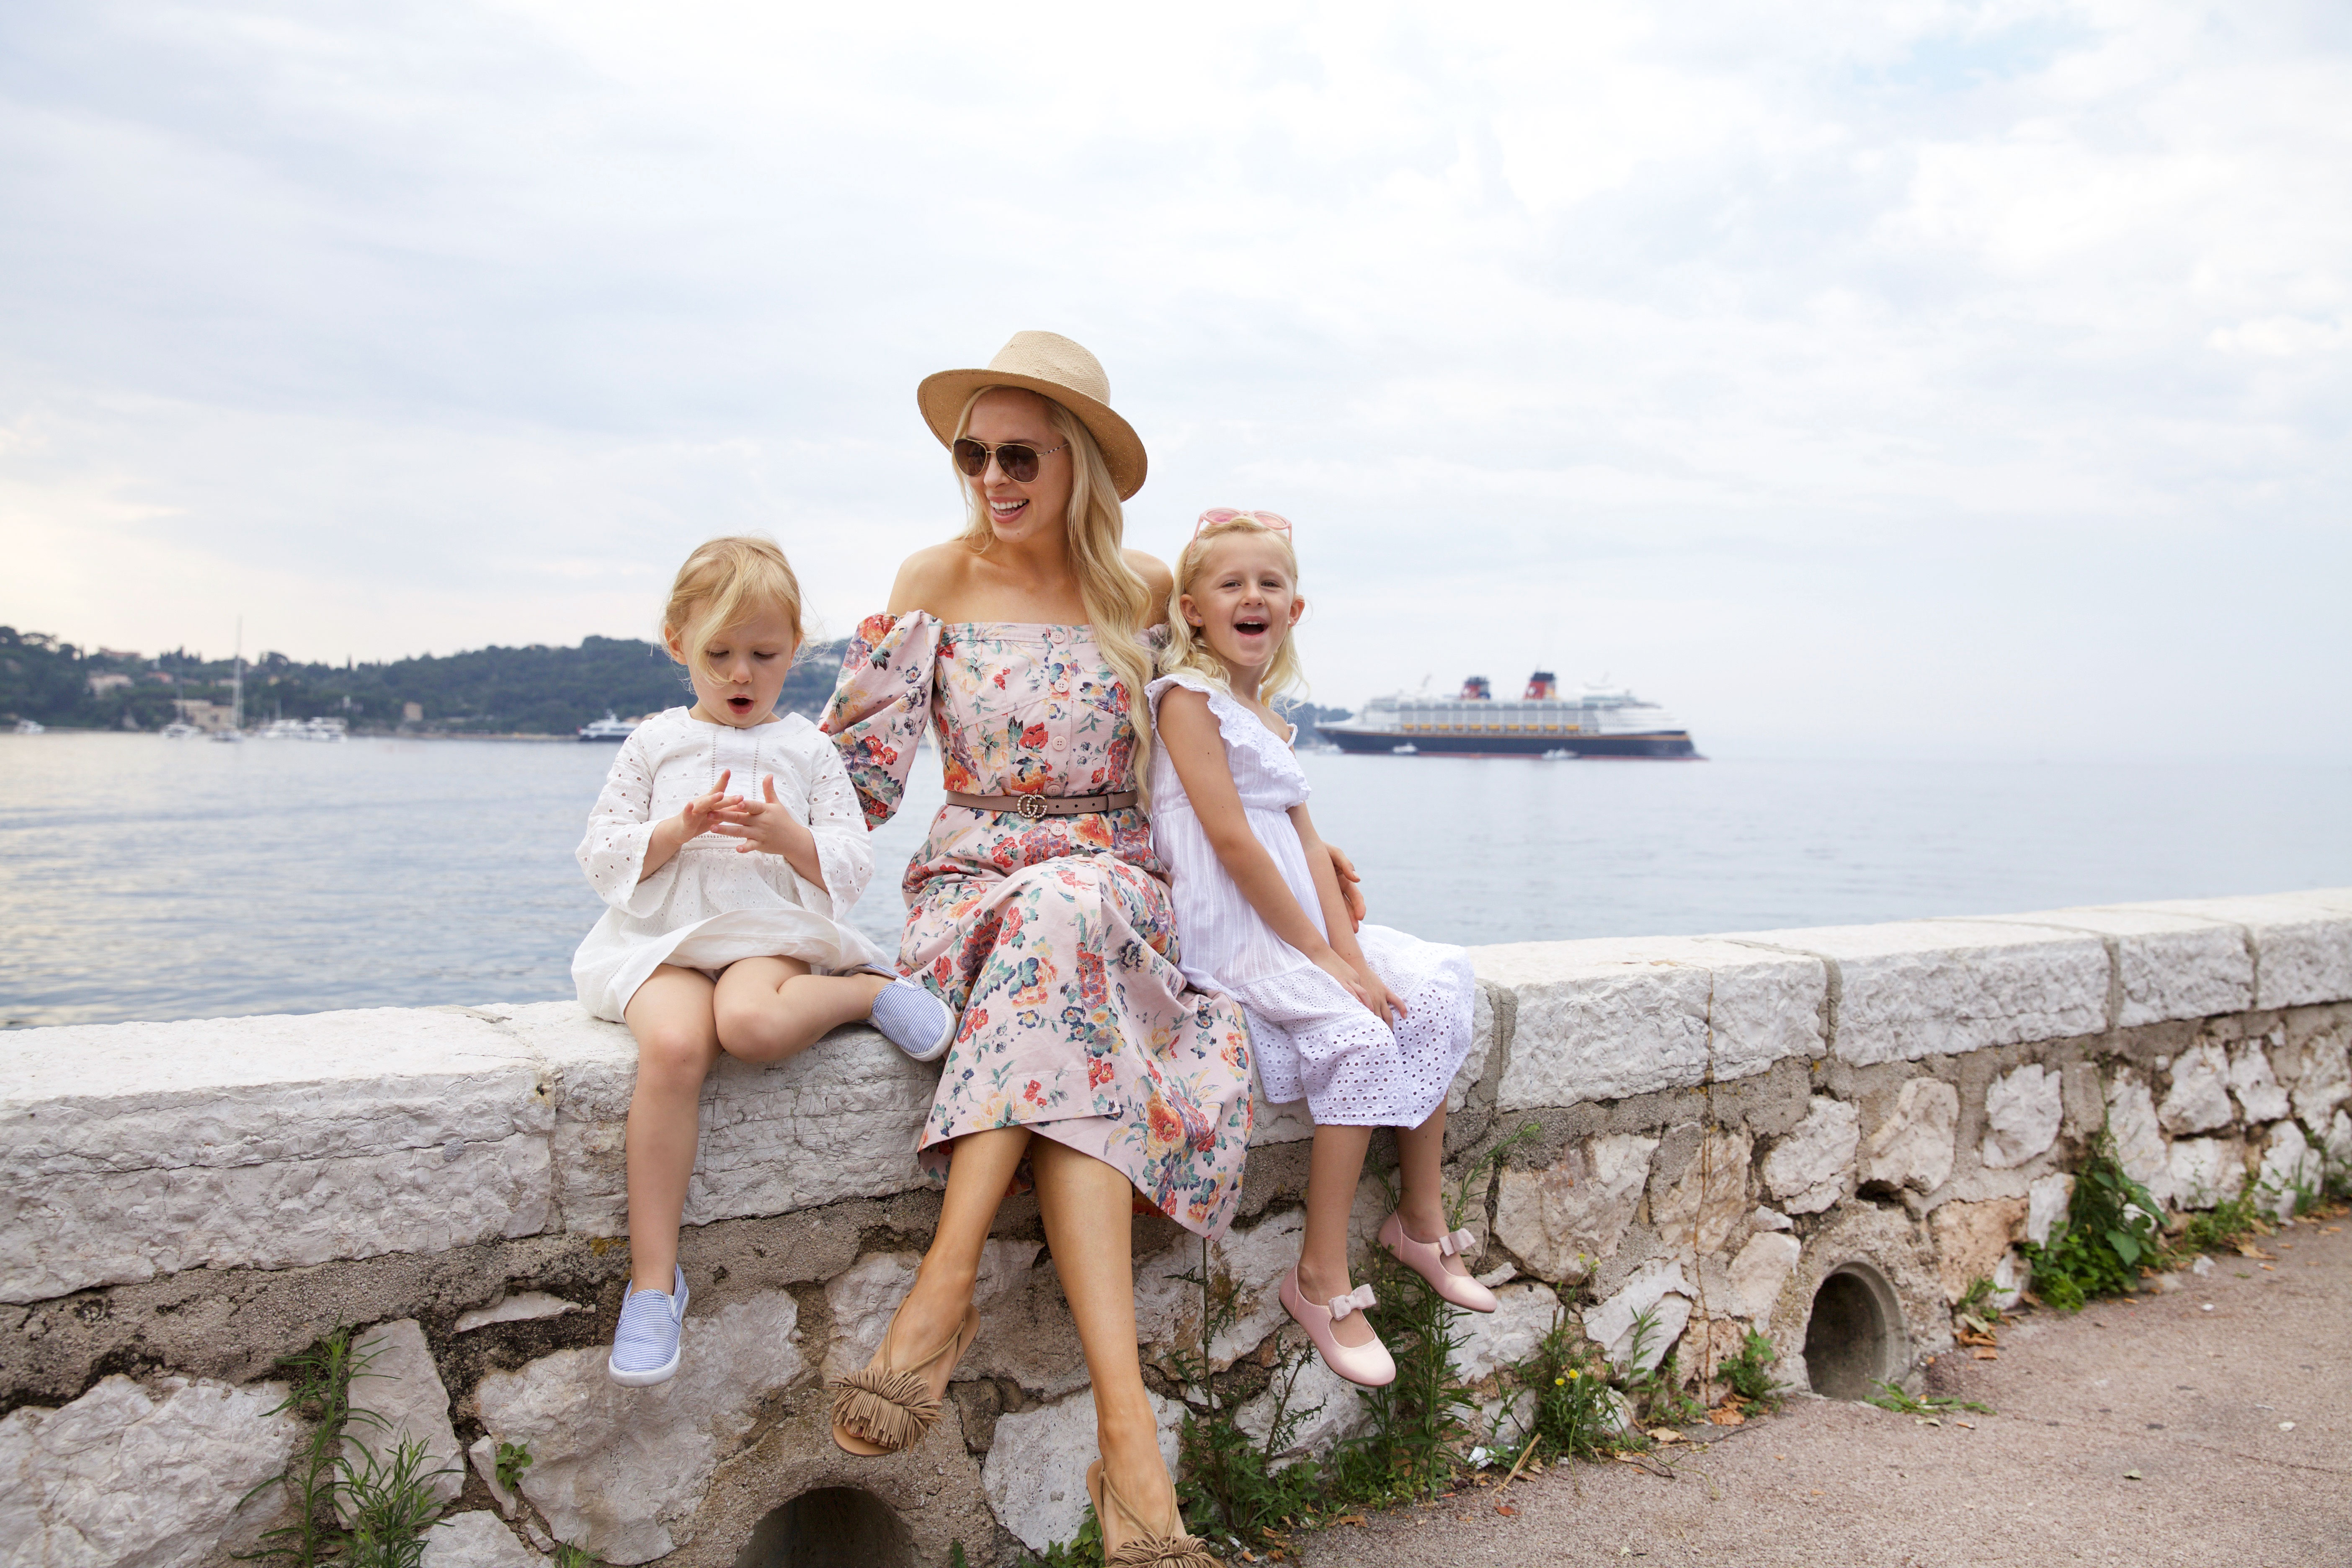 Rebecca Taylor Marlena Off the Shoulder Floral Midi Dress exploring Monaco this summer